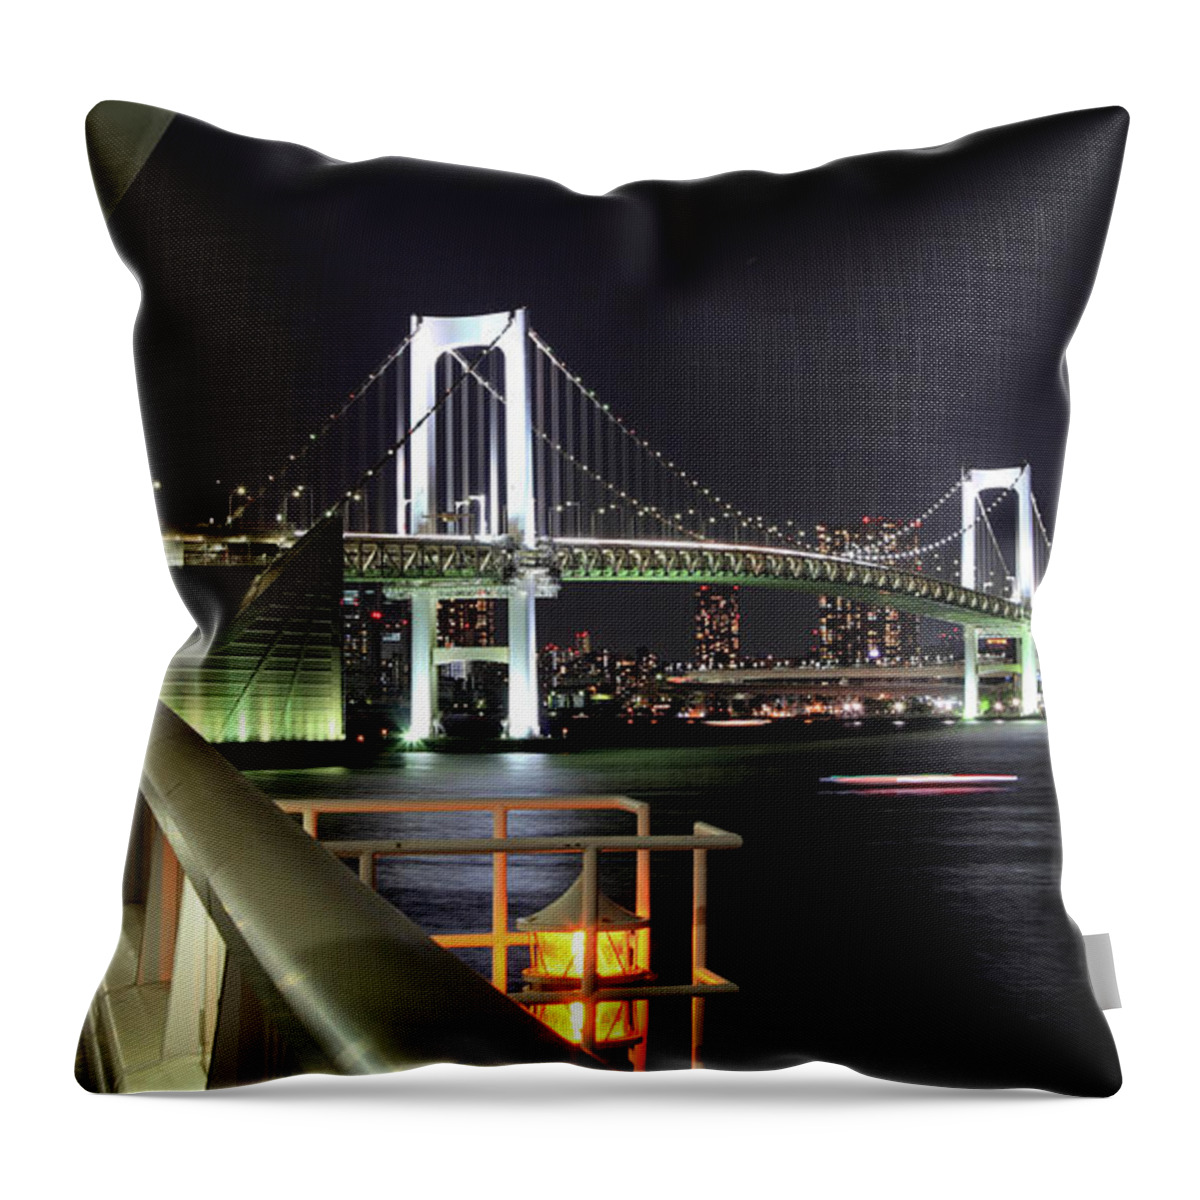 Tranquility Throw Pillow featuring the photograph Rainbow Bridge Tokyo by Krzysztof Baranowski